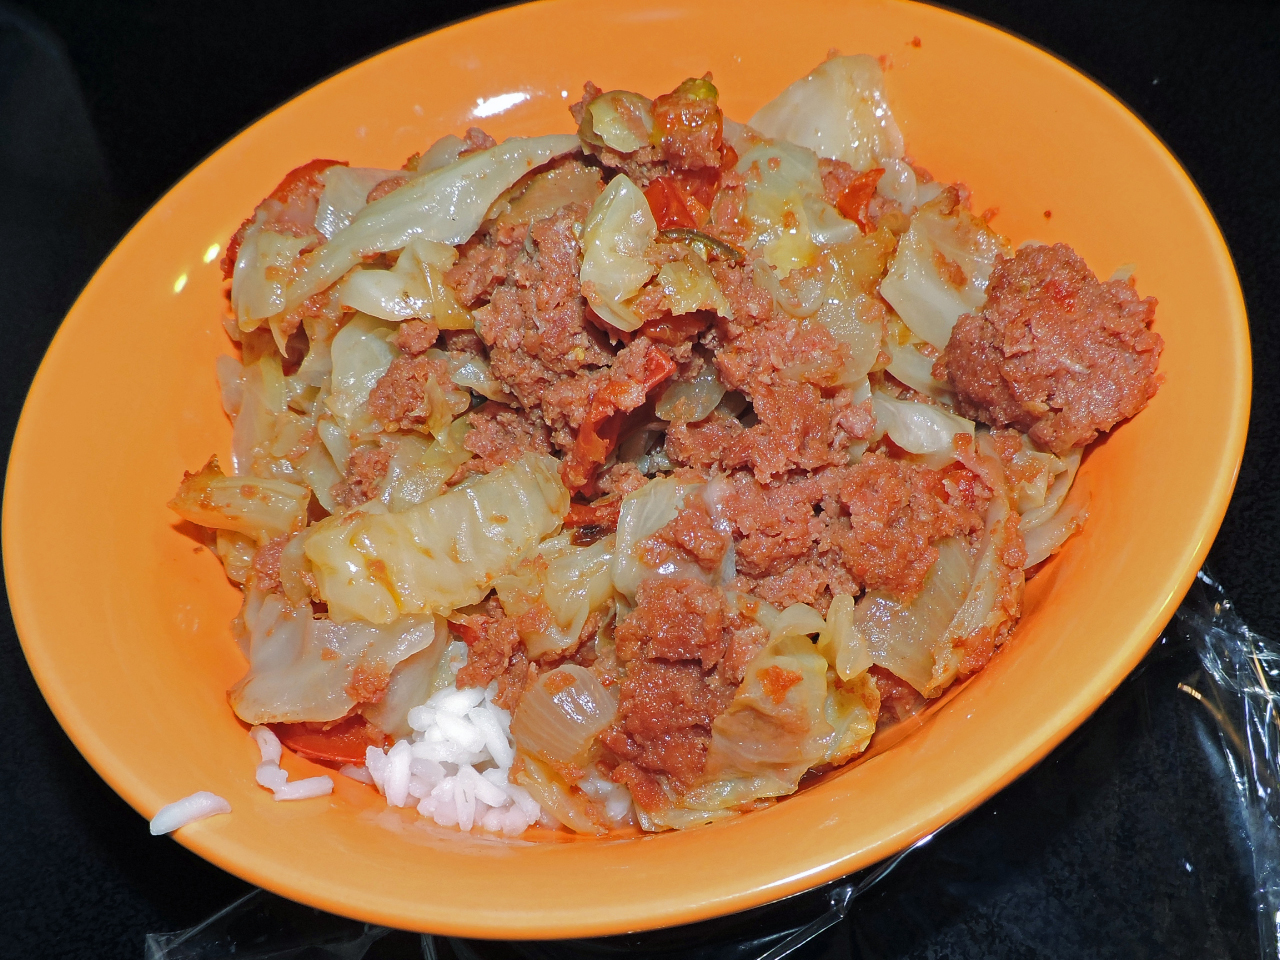 Filipino Corned Beef and Cabbage